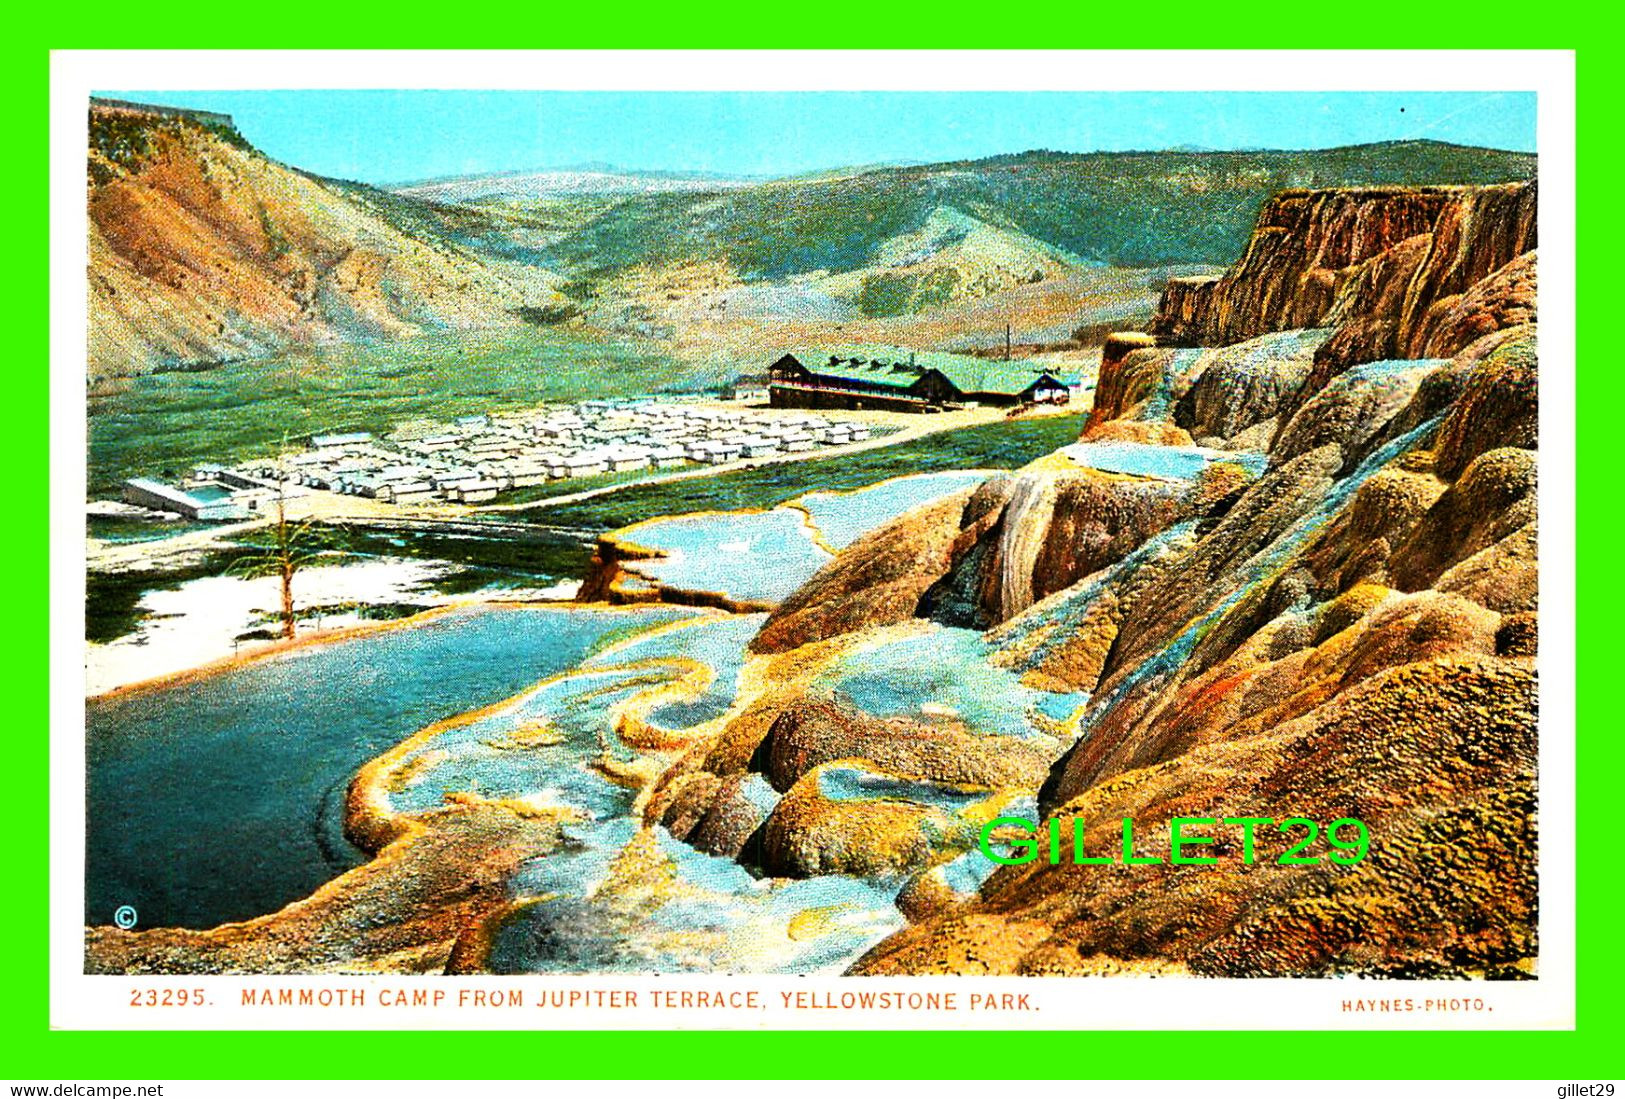 YELLOWSTONE, WY - MAMMOTH CAMP FROM JUPITER TERRACE - YELLOWSTONE PARK - PUB. BY J. E. HAYNES - - Yellowstone